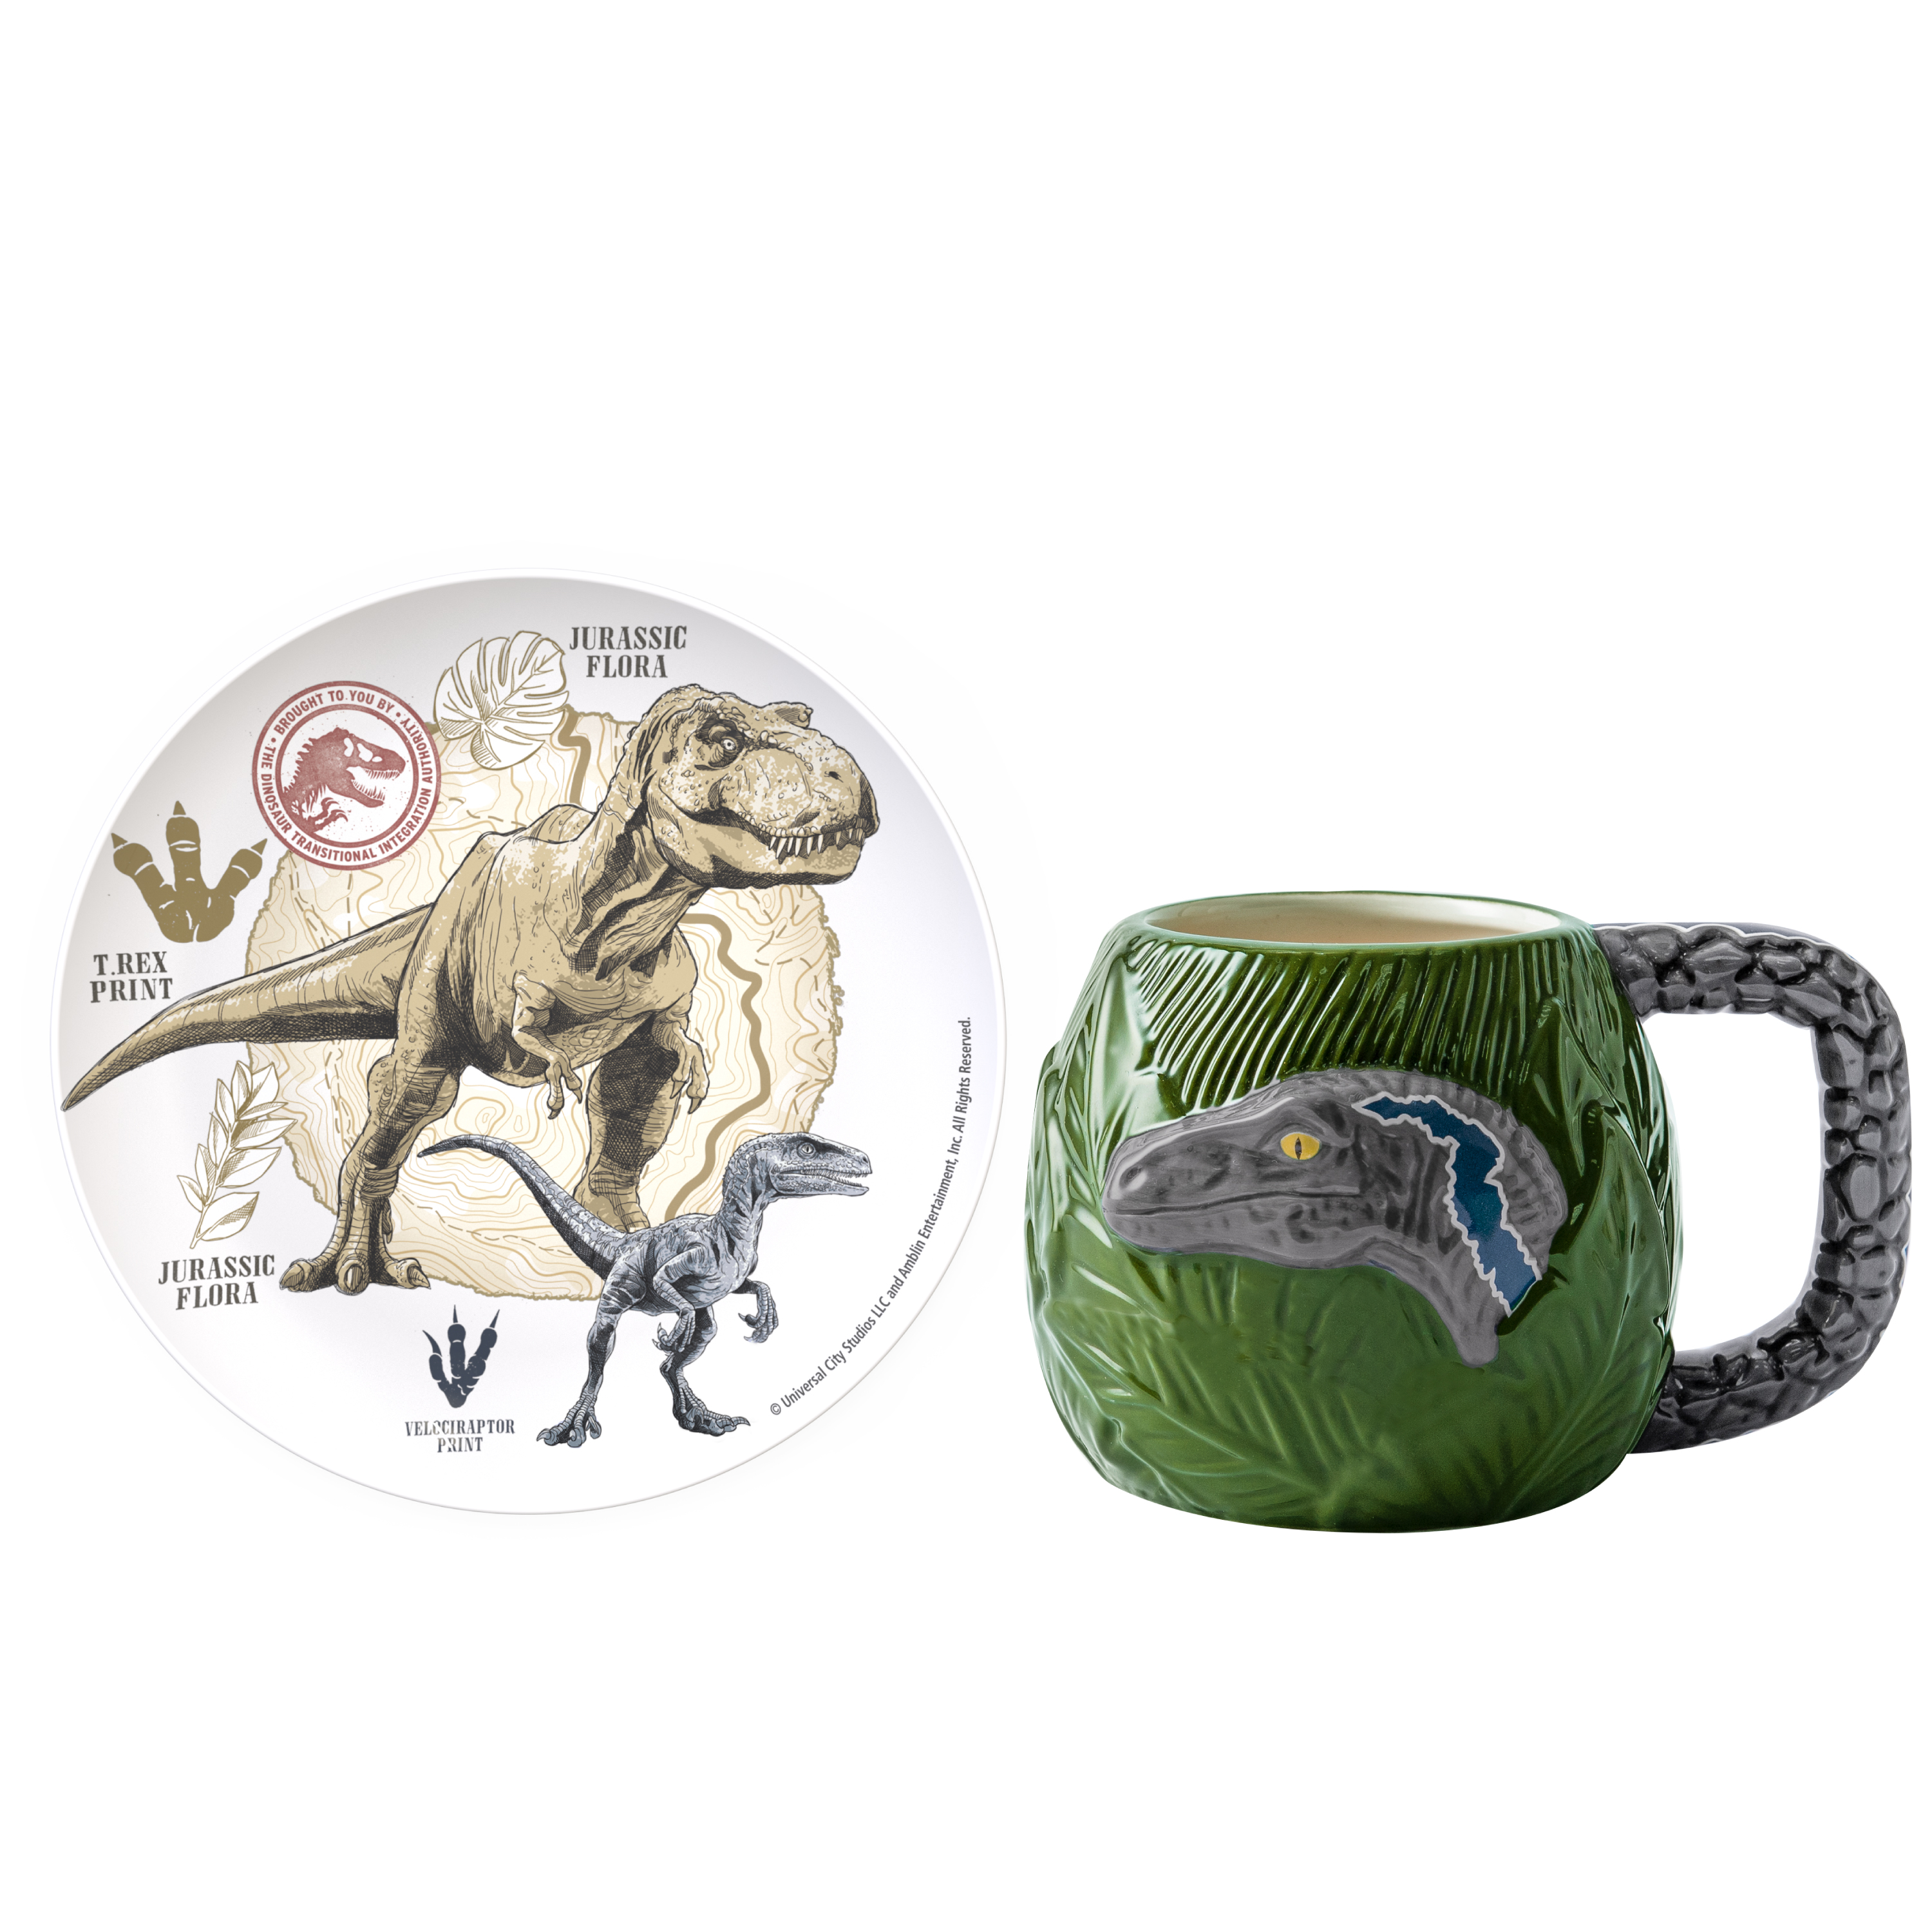 Jurassic World Dominion Ceramic Plate and Mug Set, Velociraptor & T-rex, 2-piece set slideshow image 1